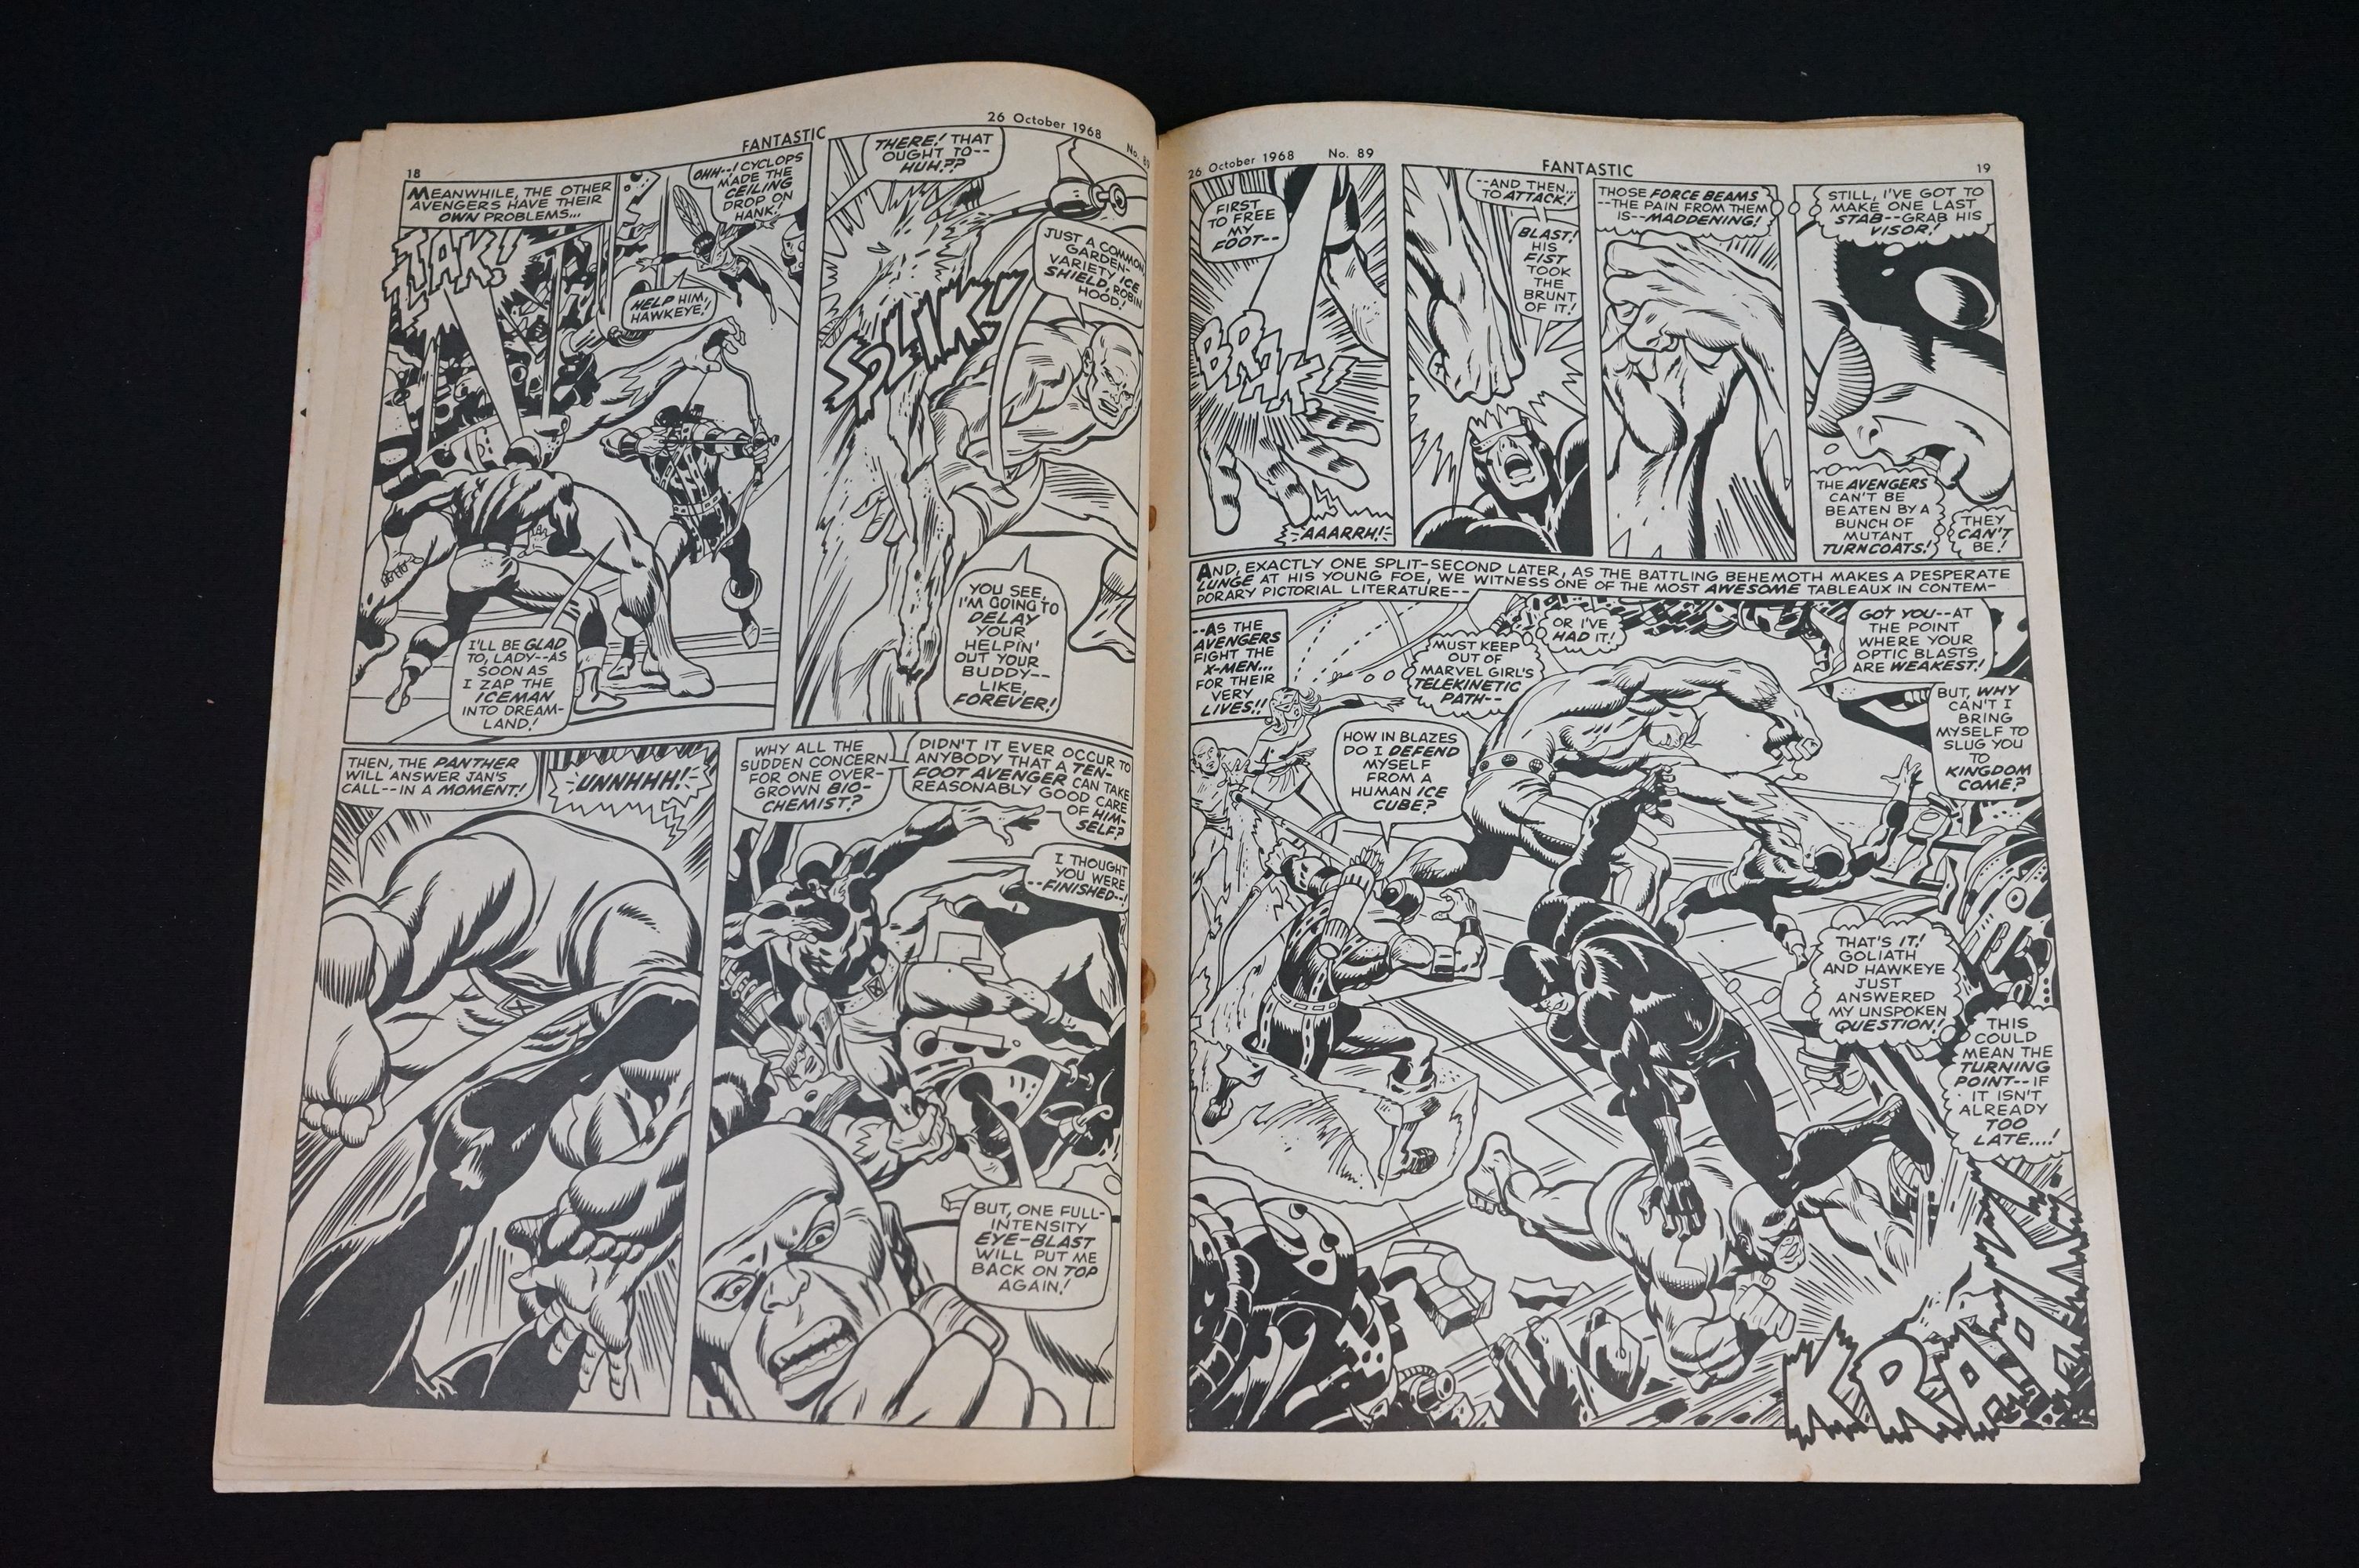 Comics - 27 A Power Comics Fantastic and Terrific comics featuring Thor, Avengers, X Men etc, some - Image 6 of 7